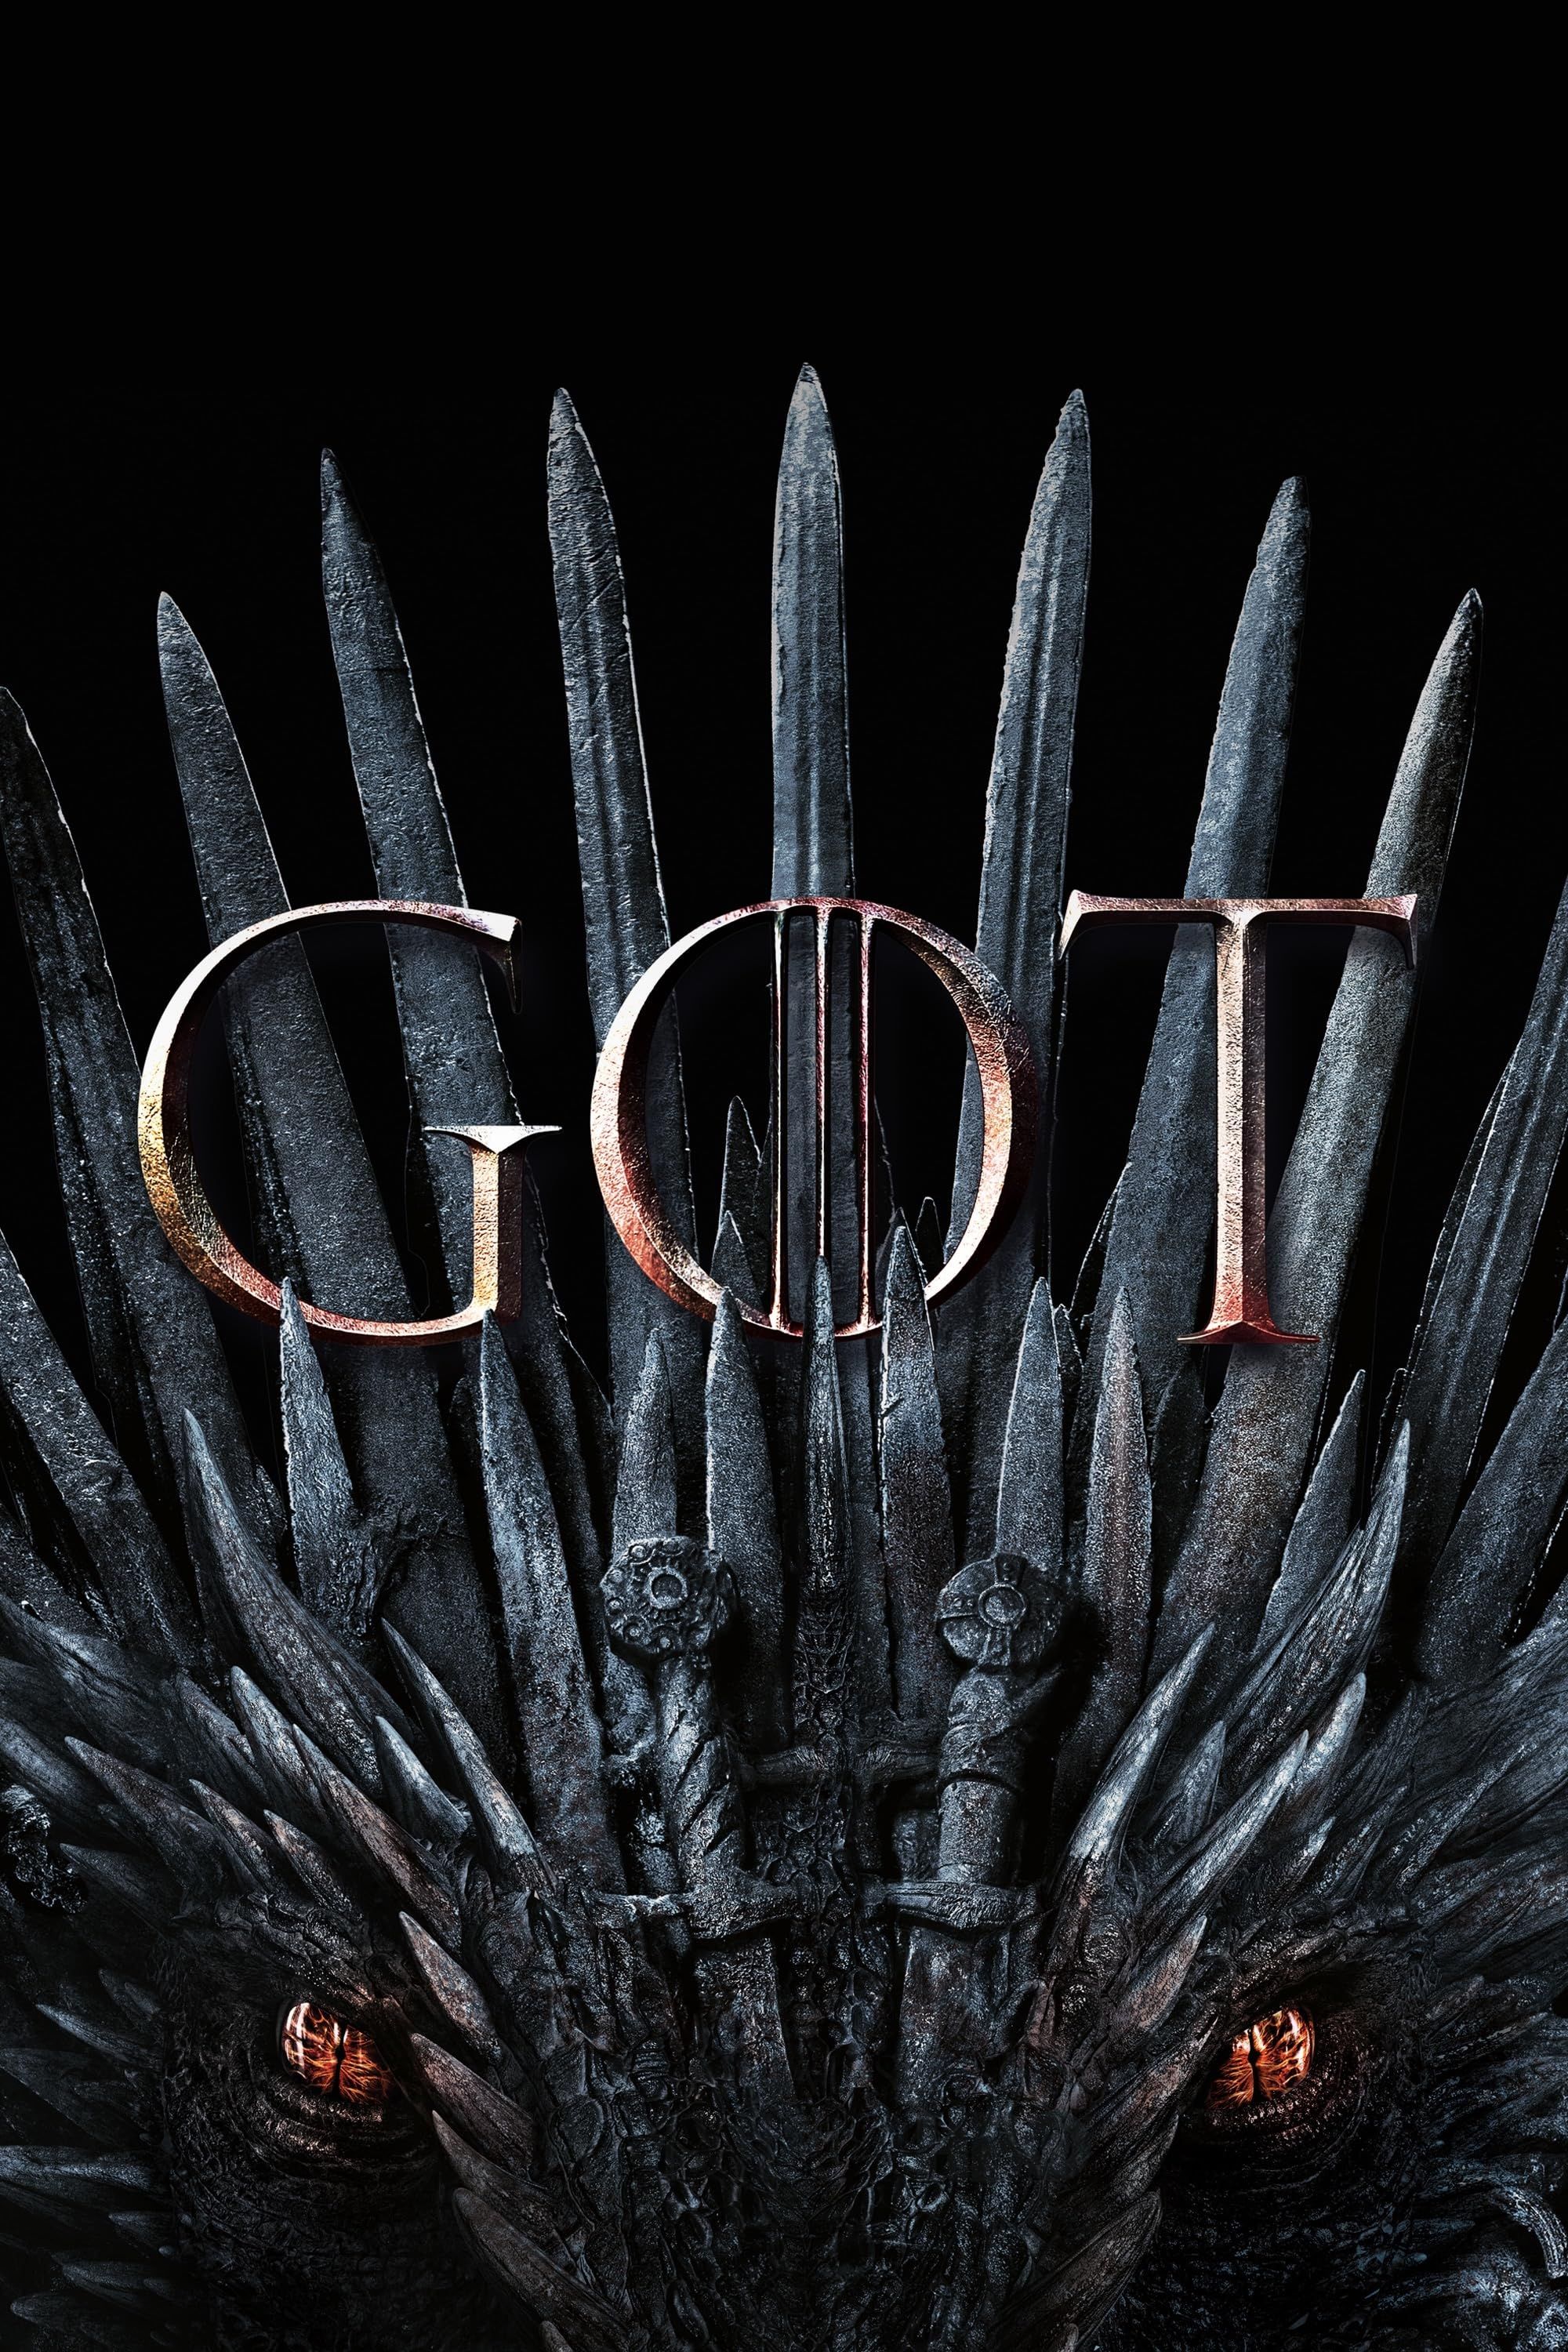 Game of Thrones (Season 8) Hindi Dubbed HBO Series HDRip 720p 480p